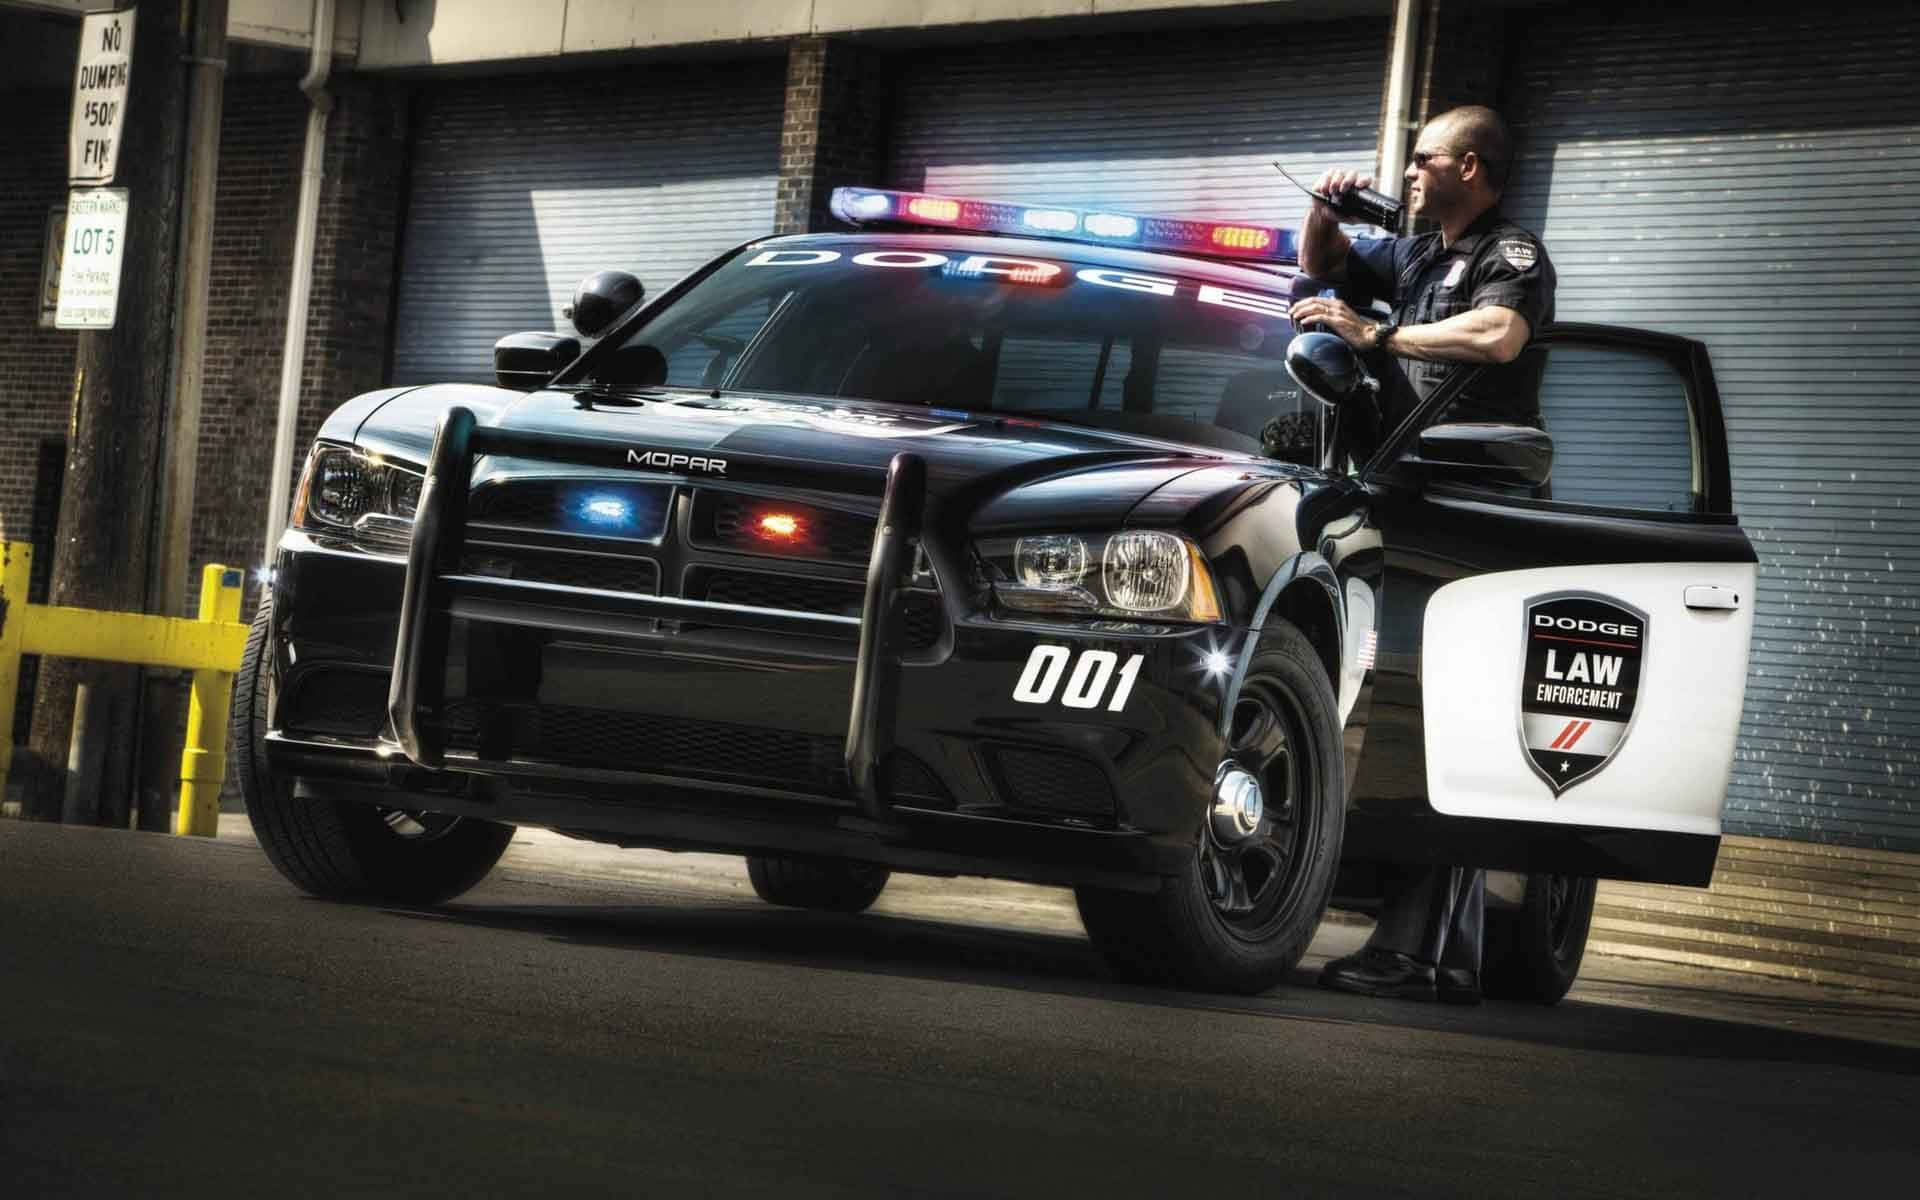 2014 Dodge Charger Pursuit Police Cop Car Background